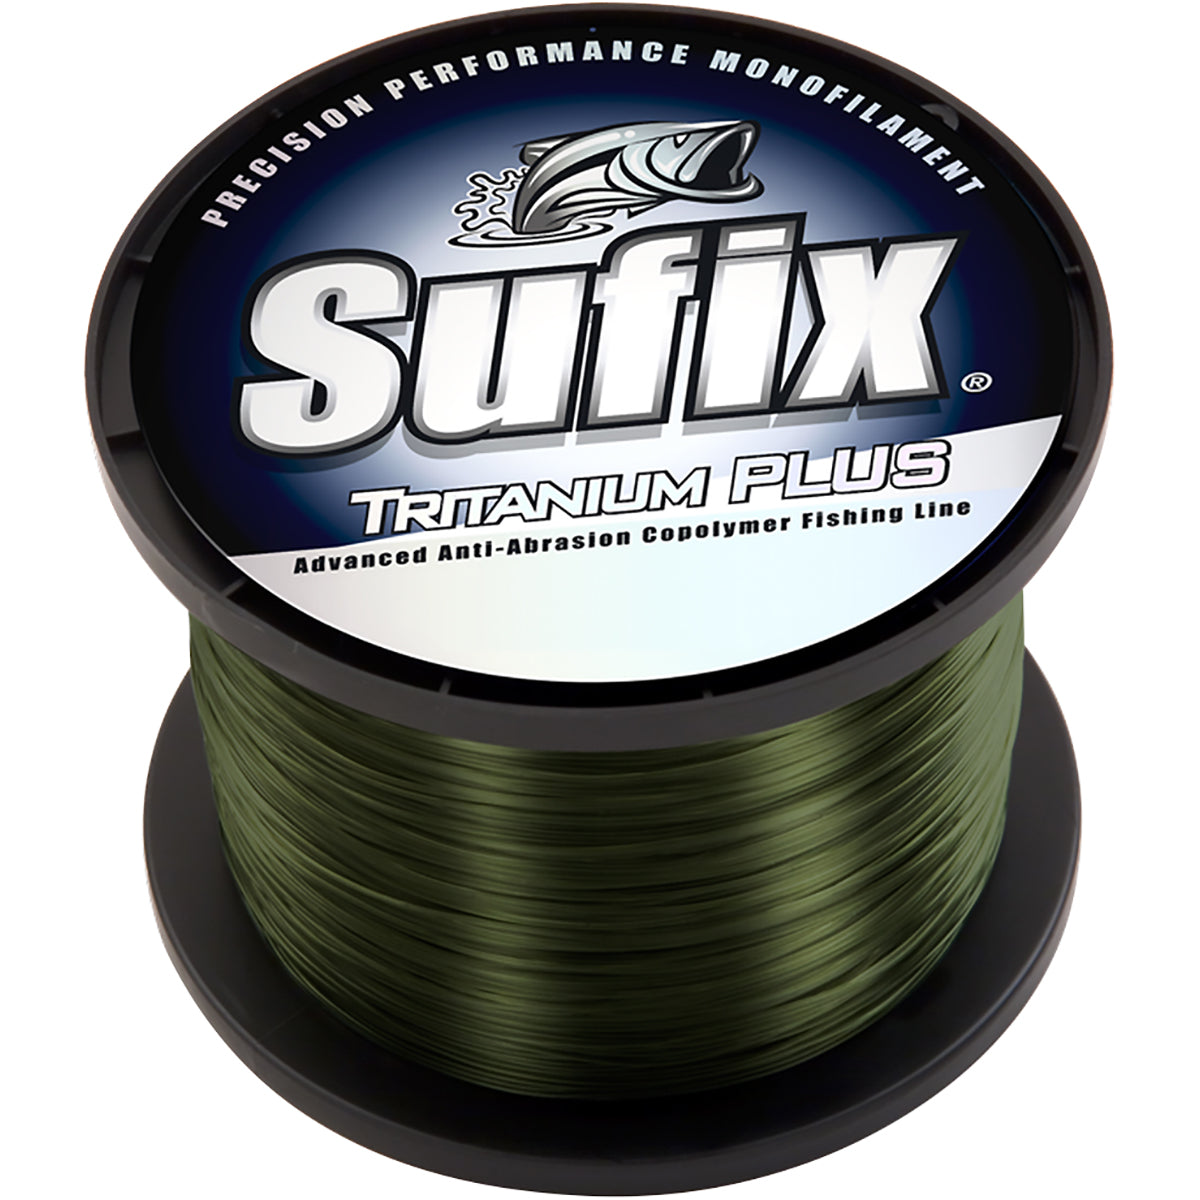 Sufix Tritanium Plus Dark Green Fishing Line (450 yds) - 30 lb Test Sufix